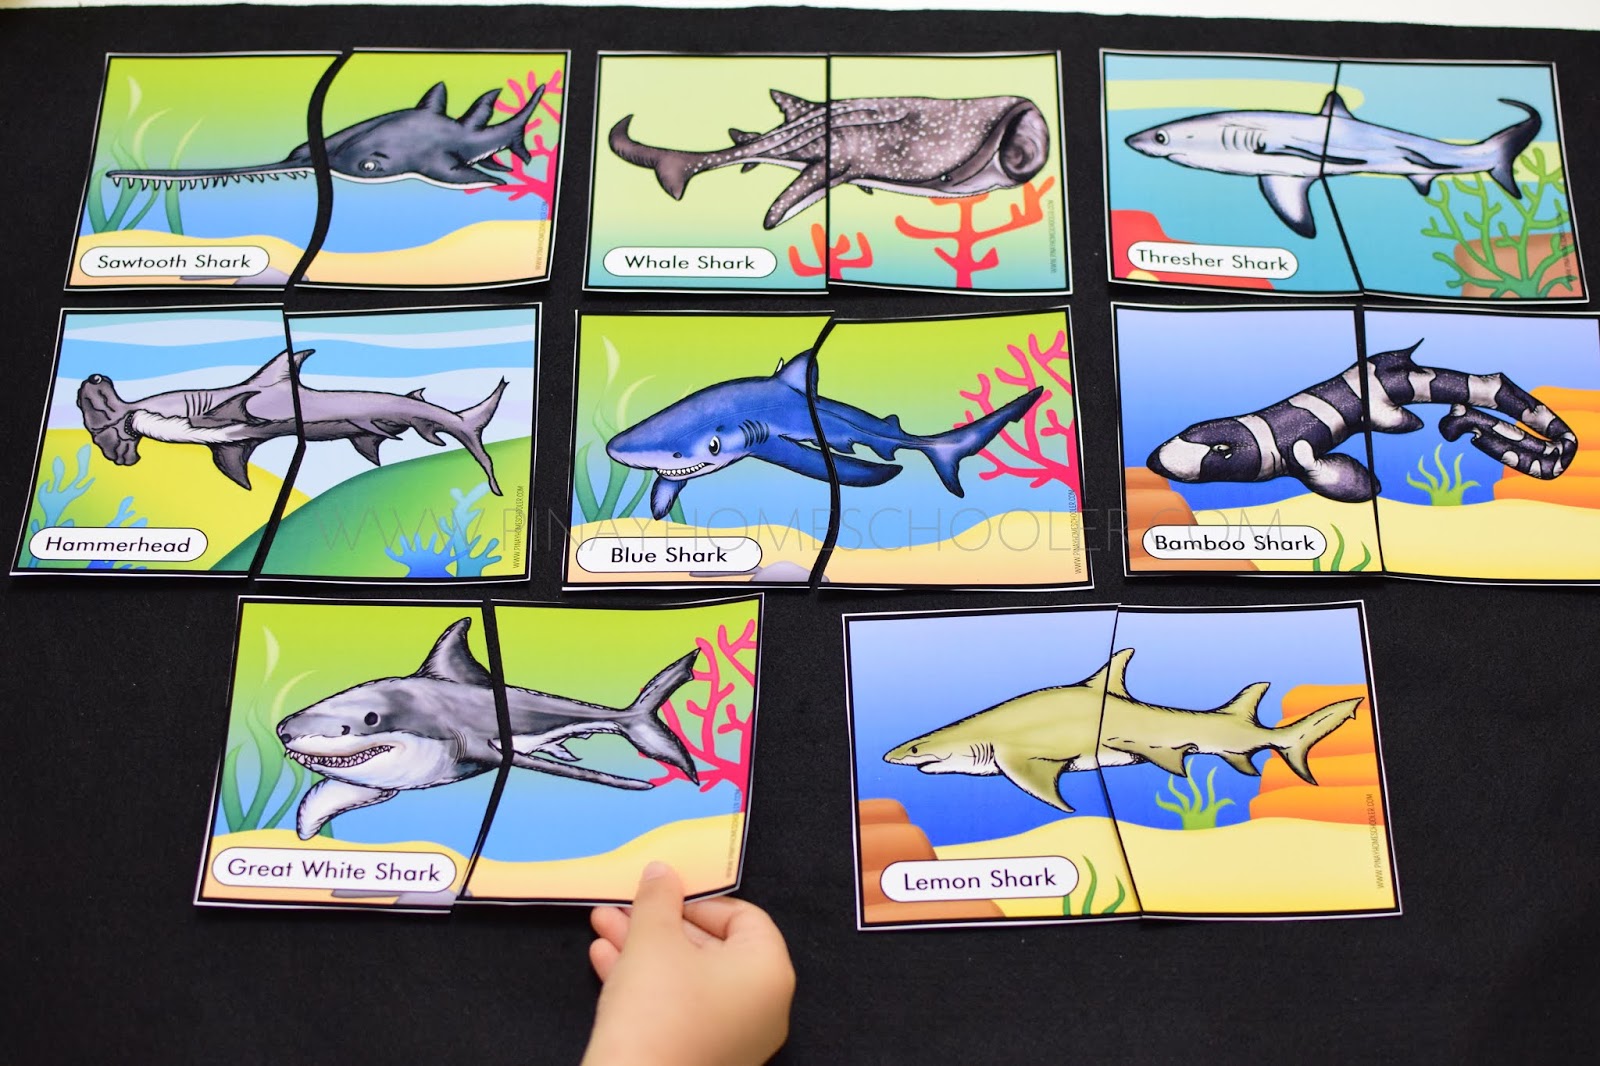 Shark I Spy Game - Simple Fun for Kids